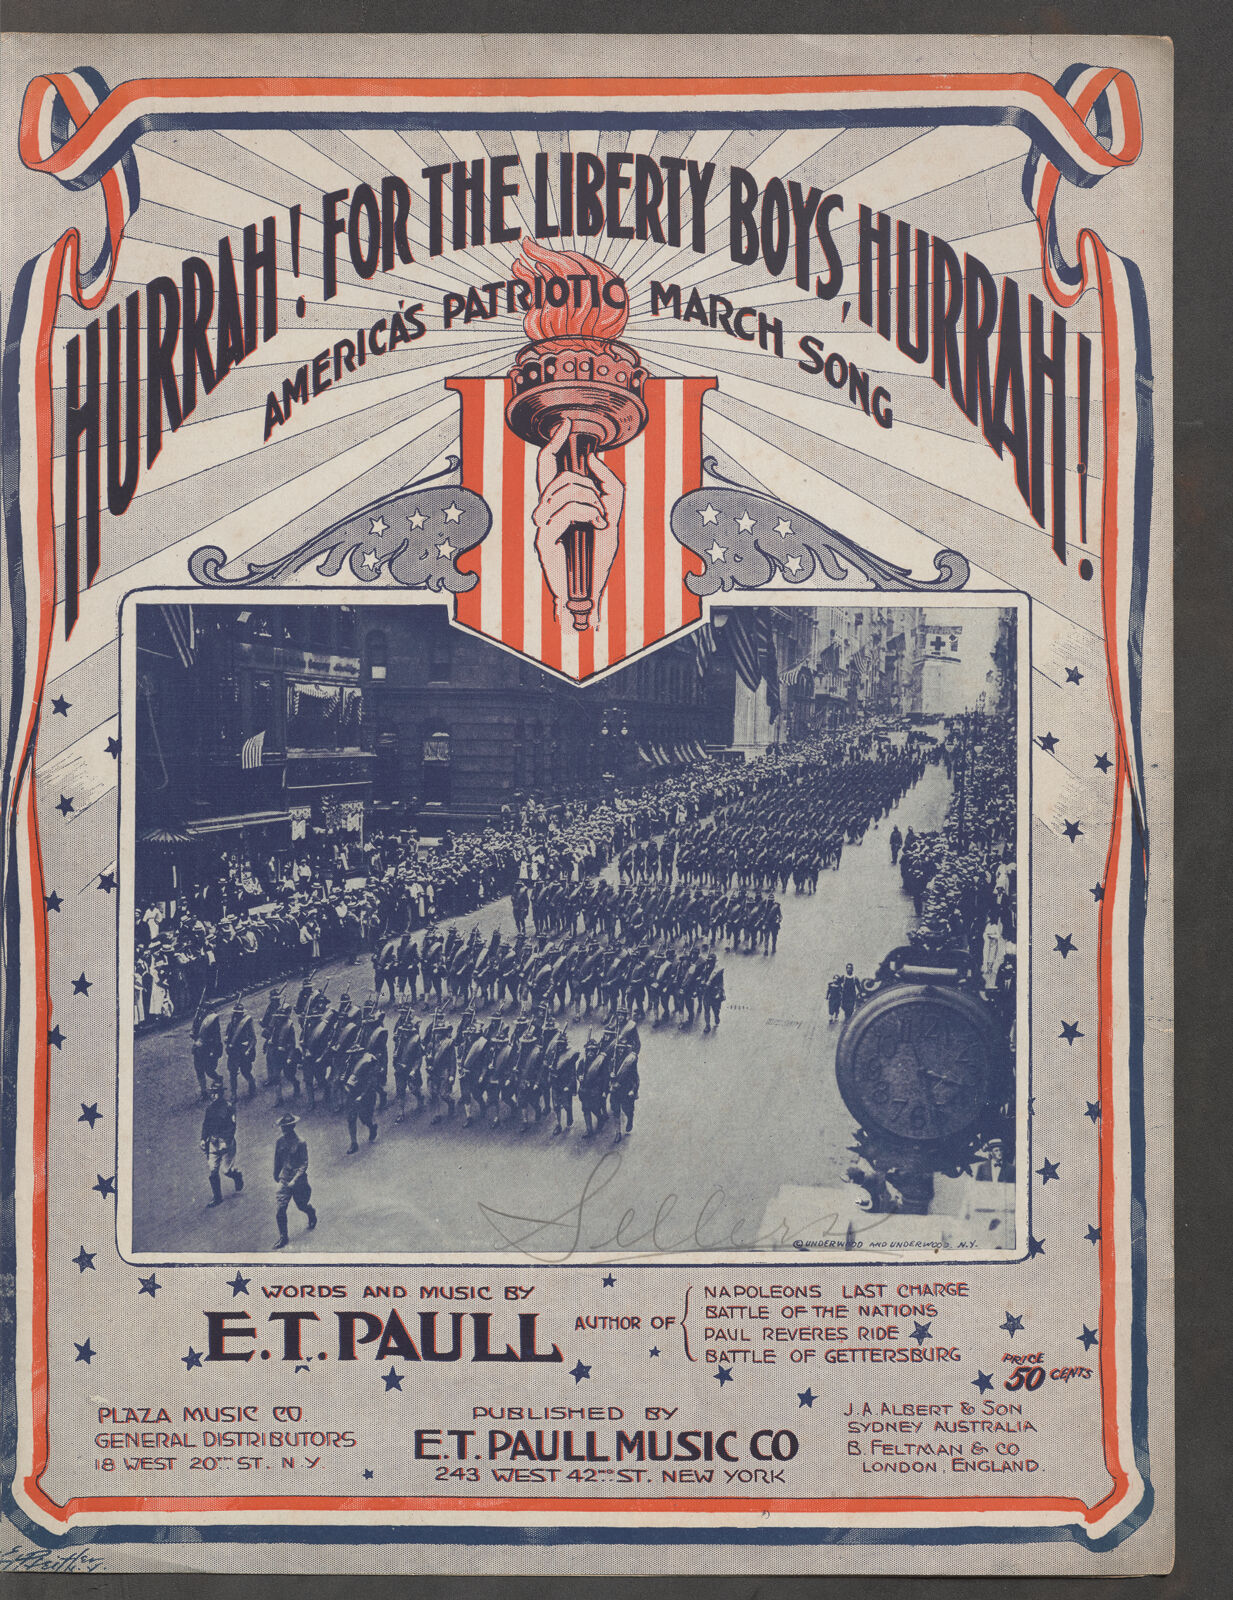 Hurrah! For the liberty boys, Hurrah! | Digital Collections at the ...